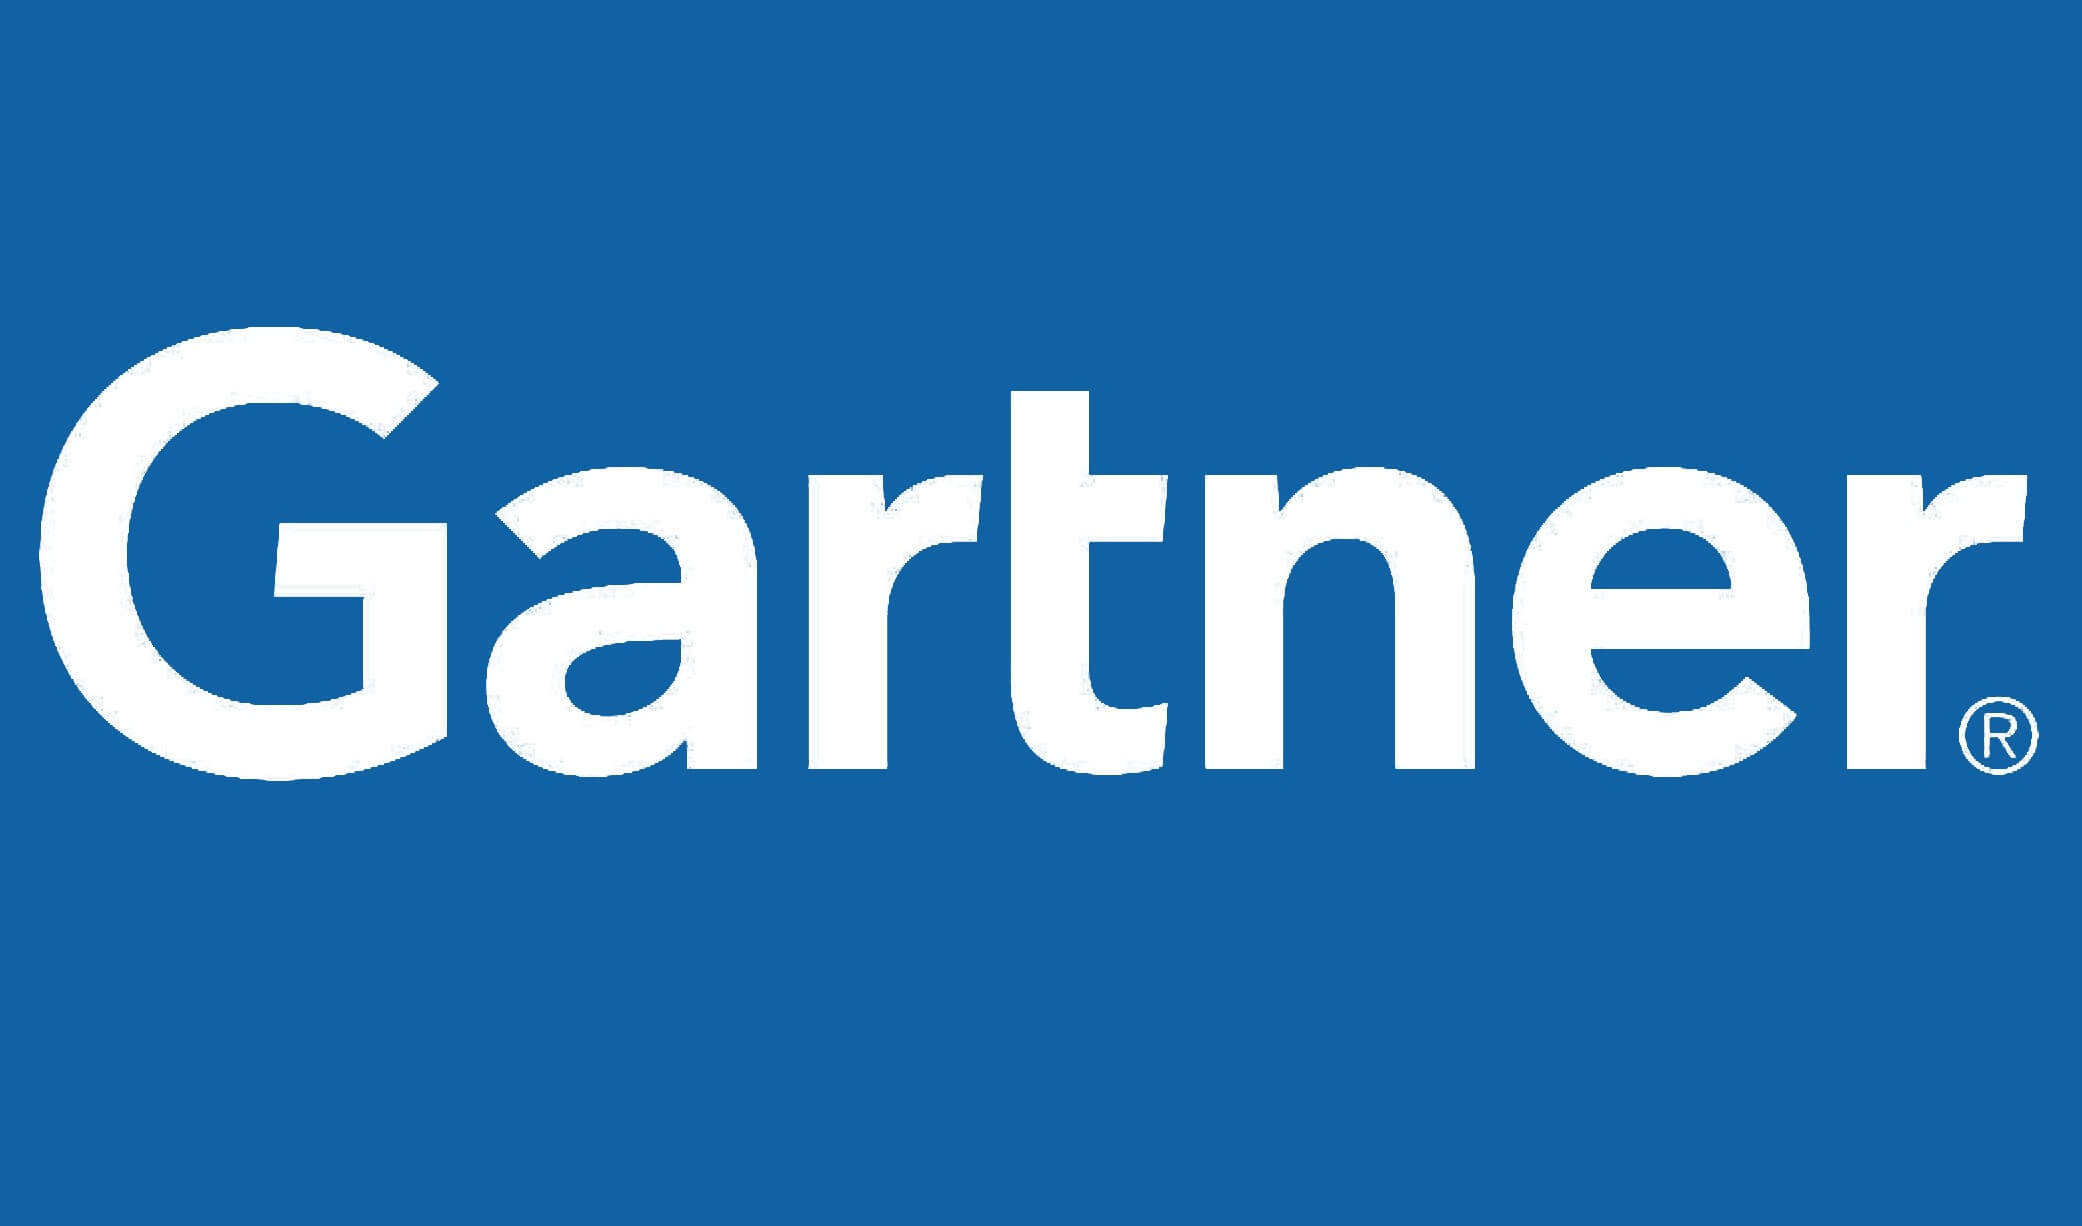 Gartner Logo PNG Vectors Free Download